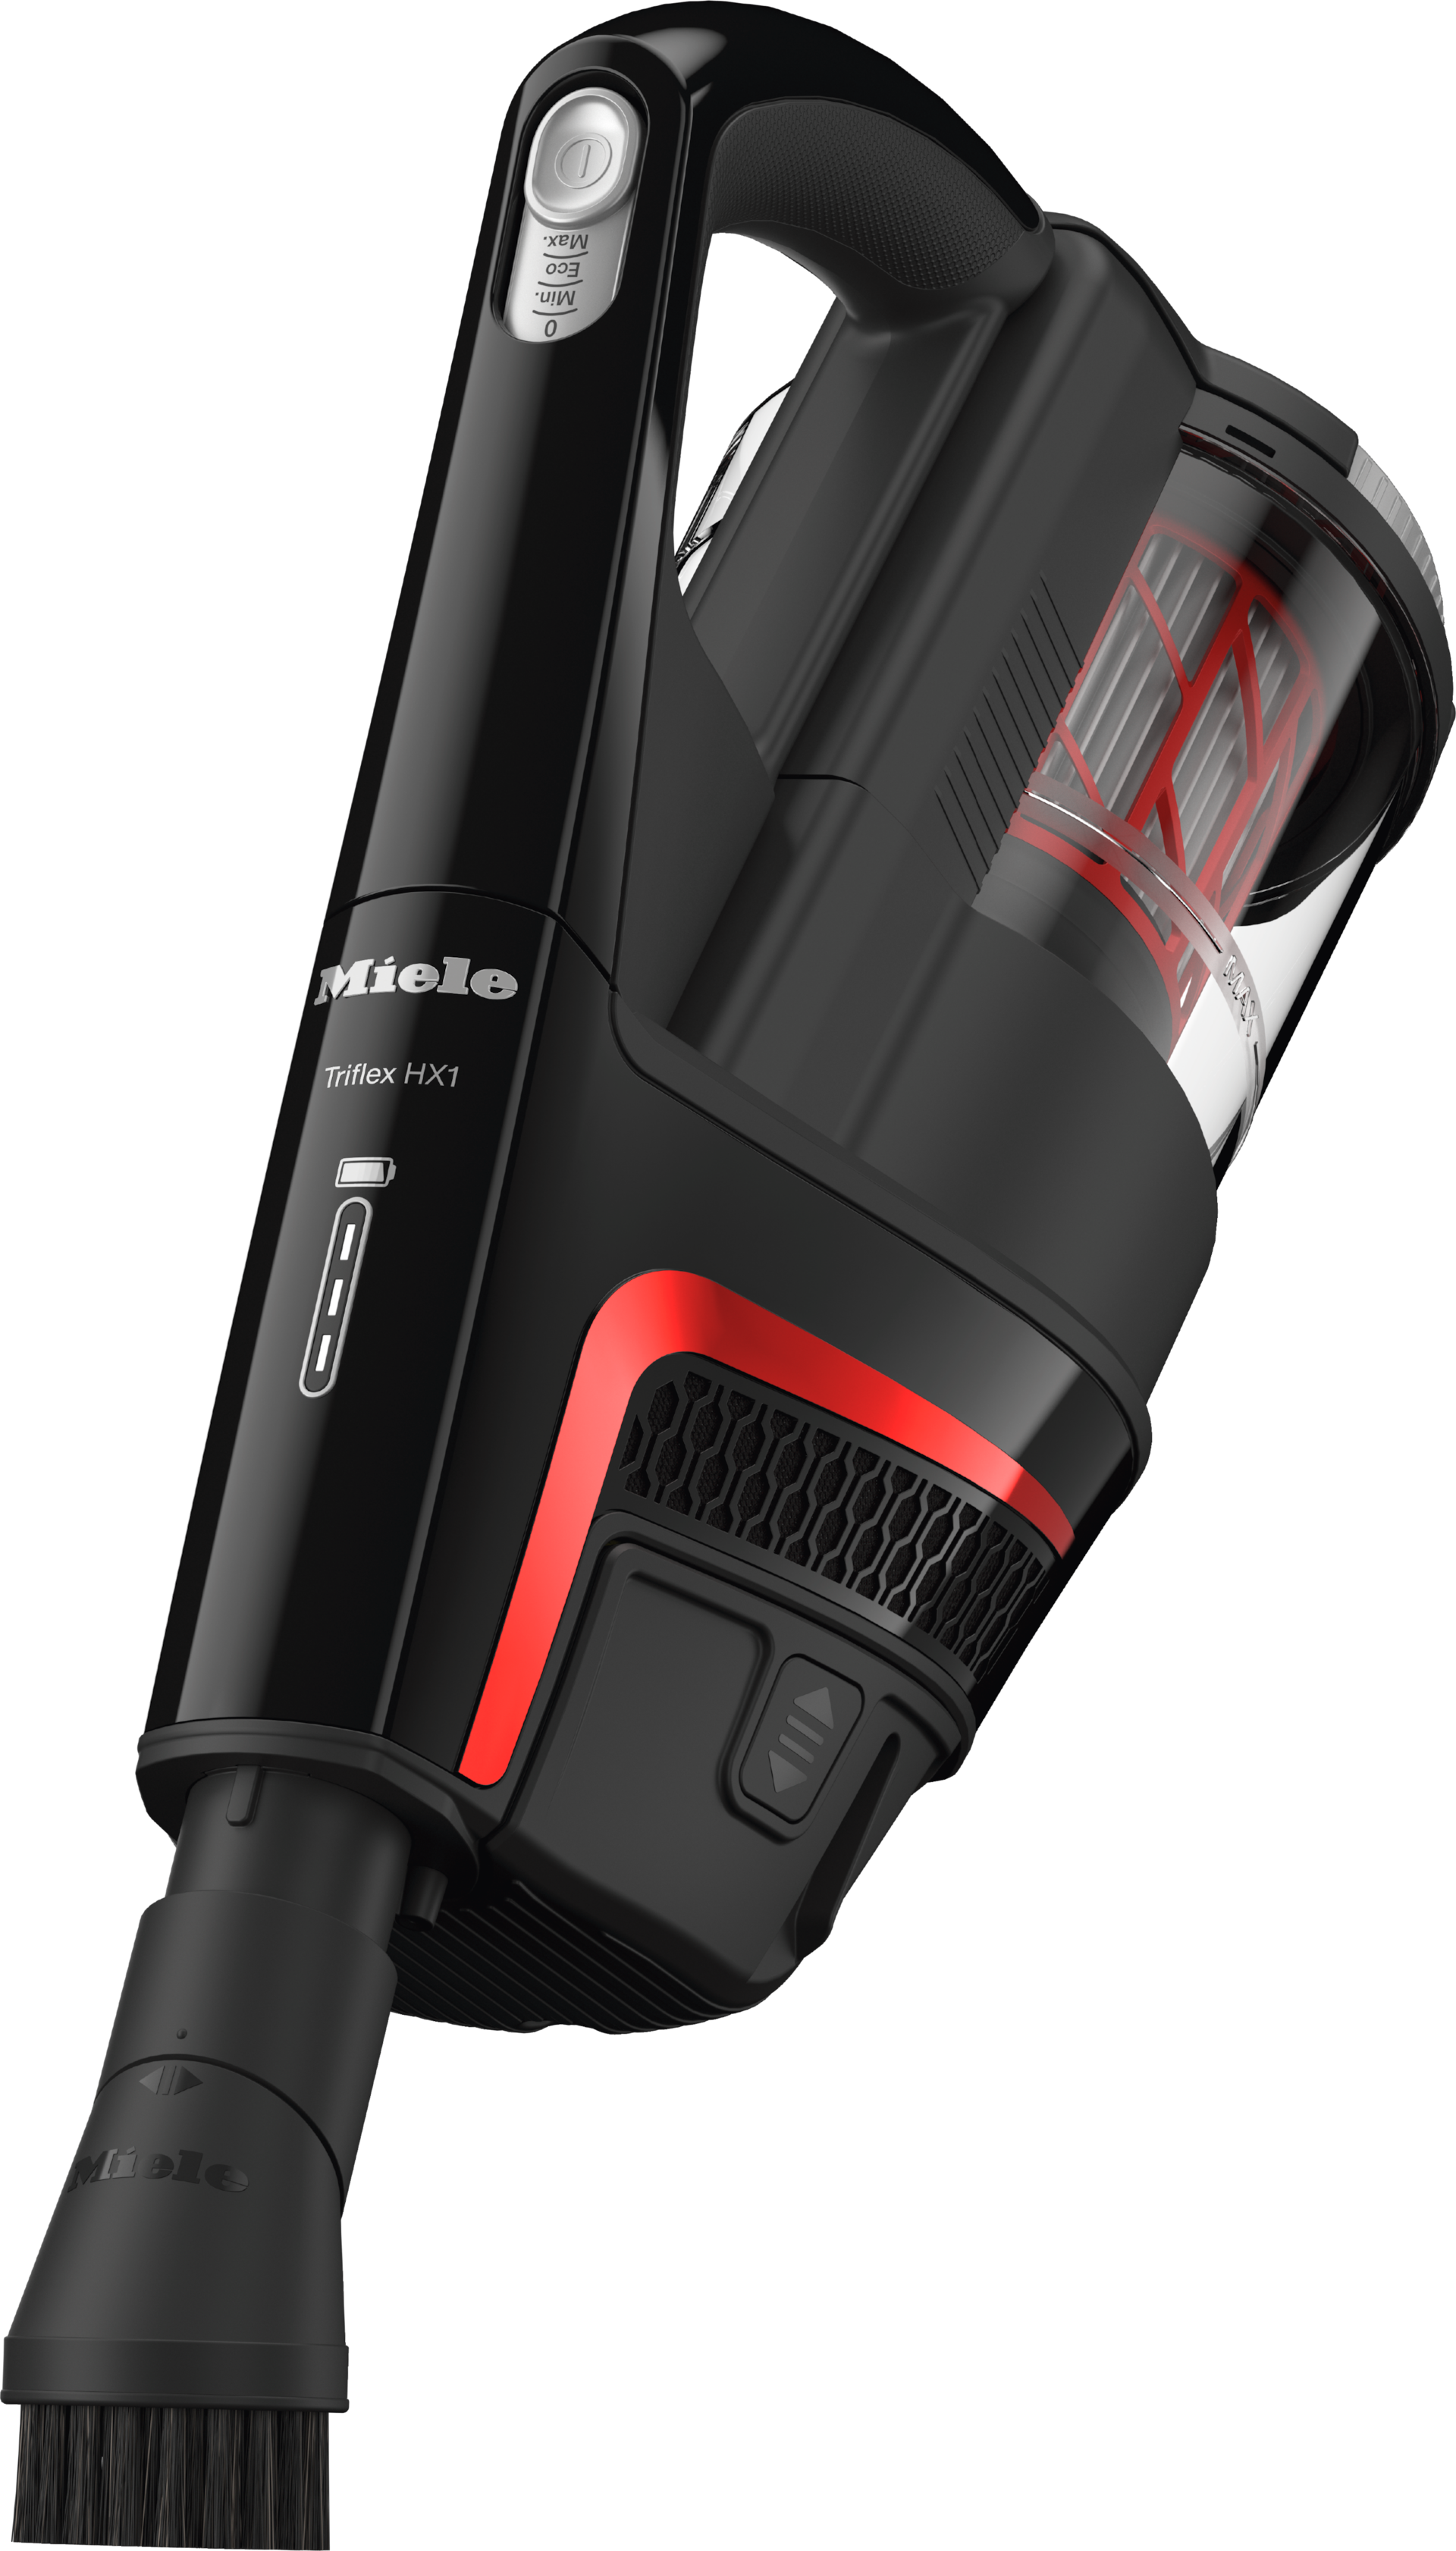 Vacuum cleaners - Triflex HX1 Facelift Obsidian black - 7